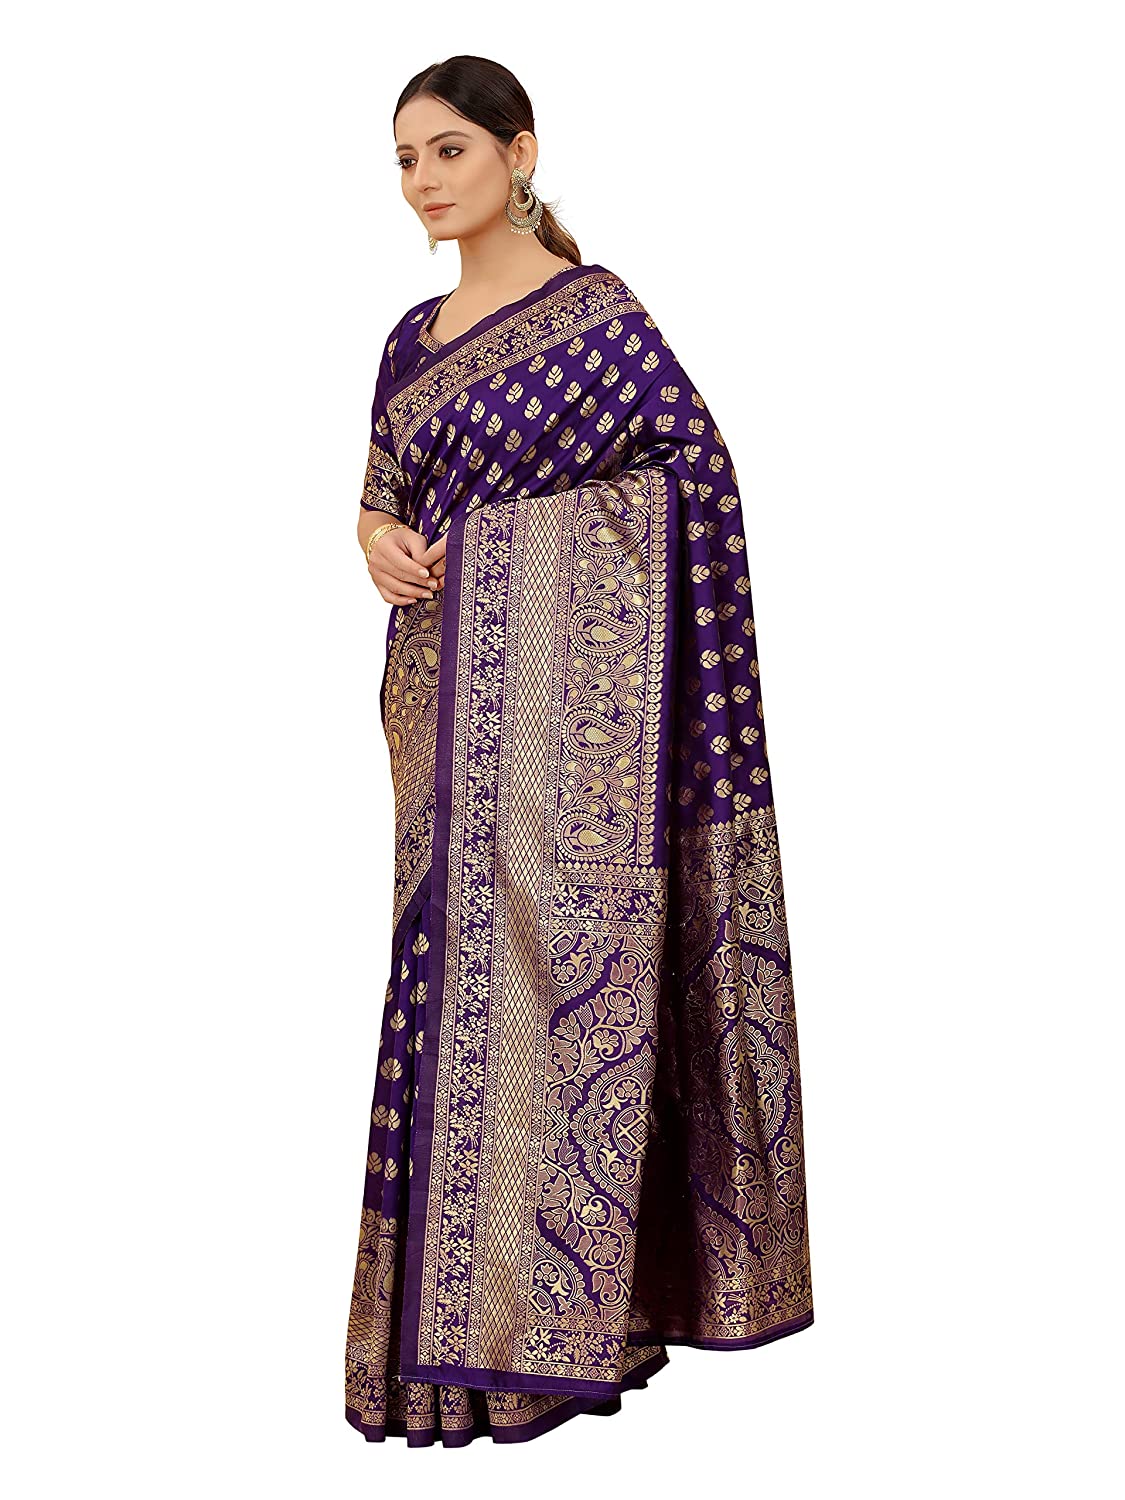 Women’s Daily/Party/Wedding/Casual Wear Rapier Jacquard Banarasi Cotton Silk Saree With Jacquard Designed Unstitched Blouse Piece.